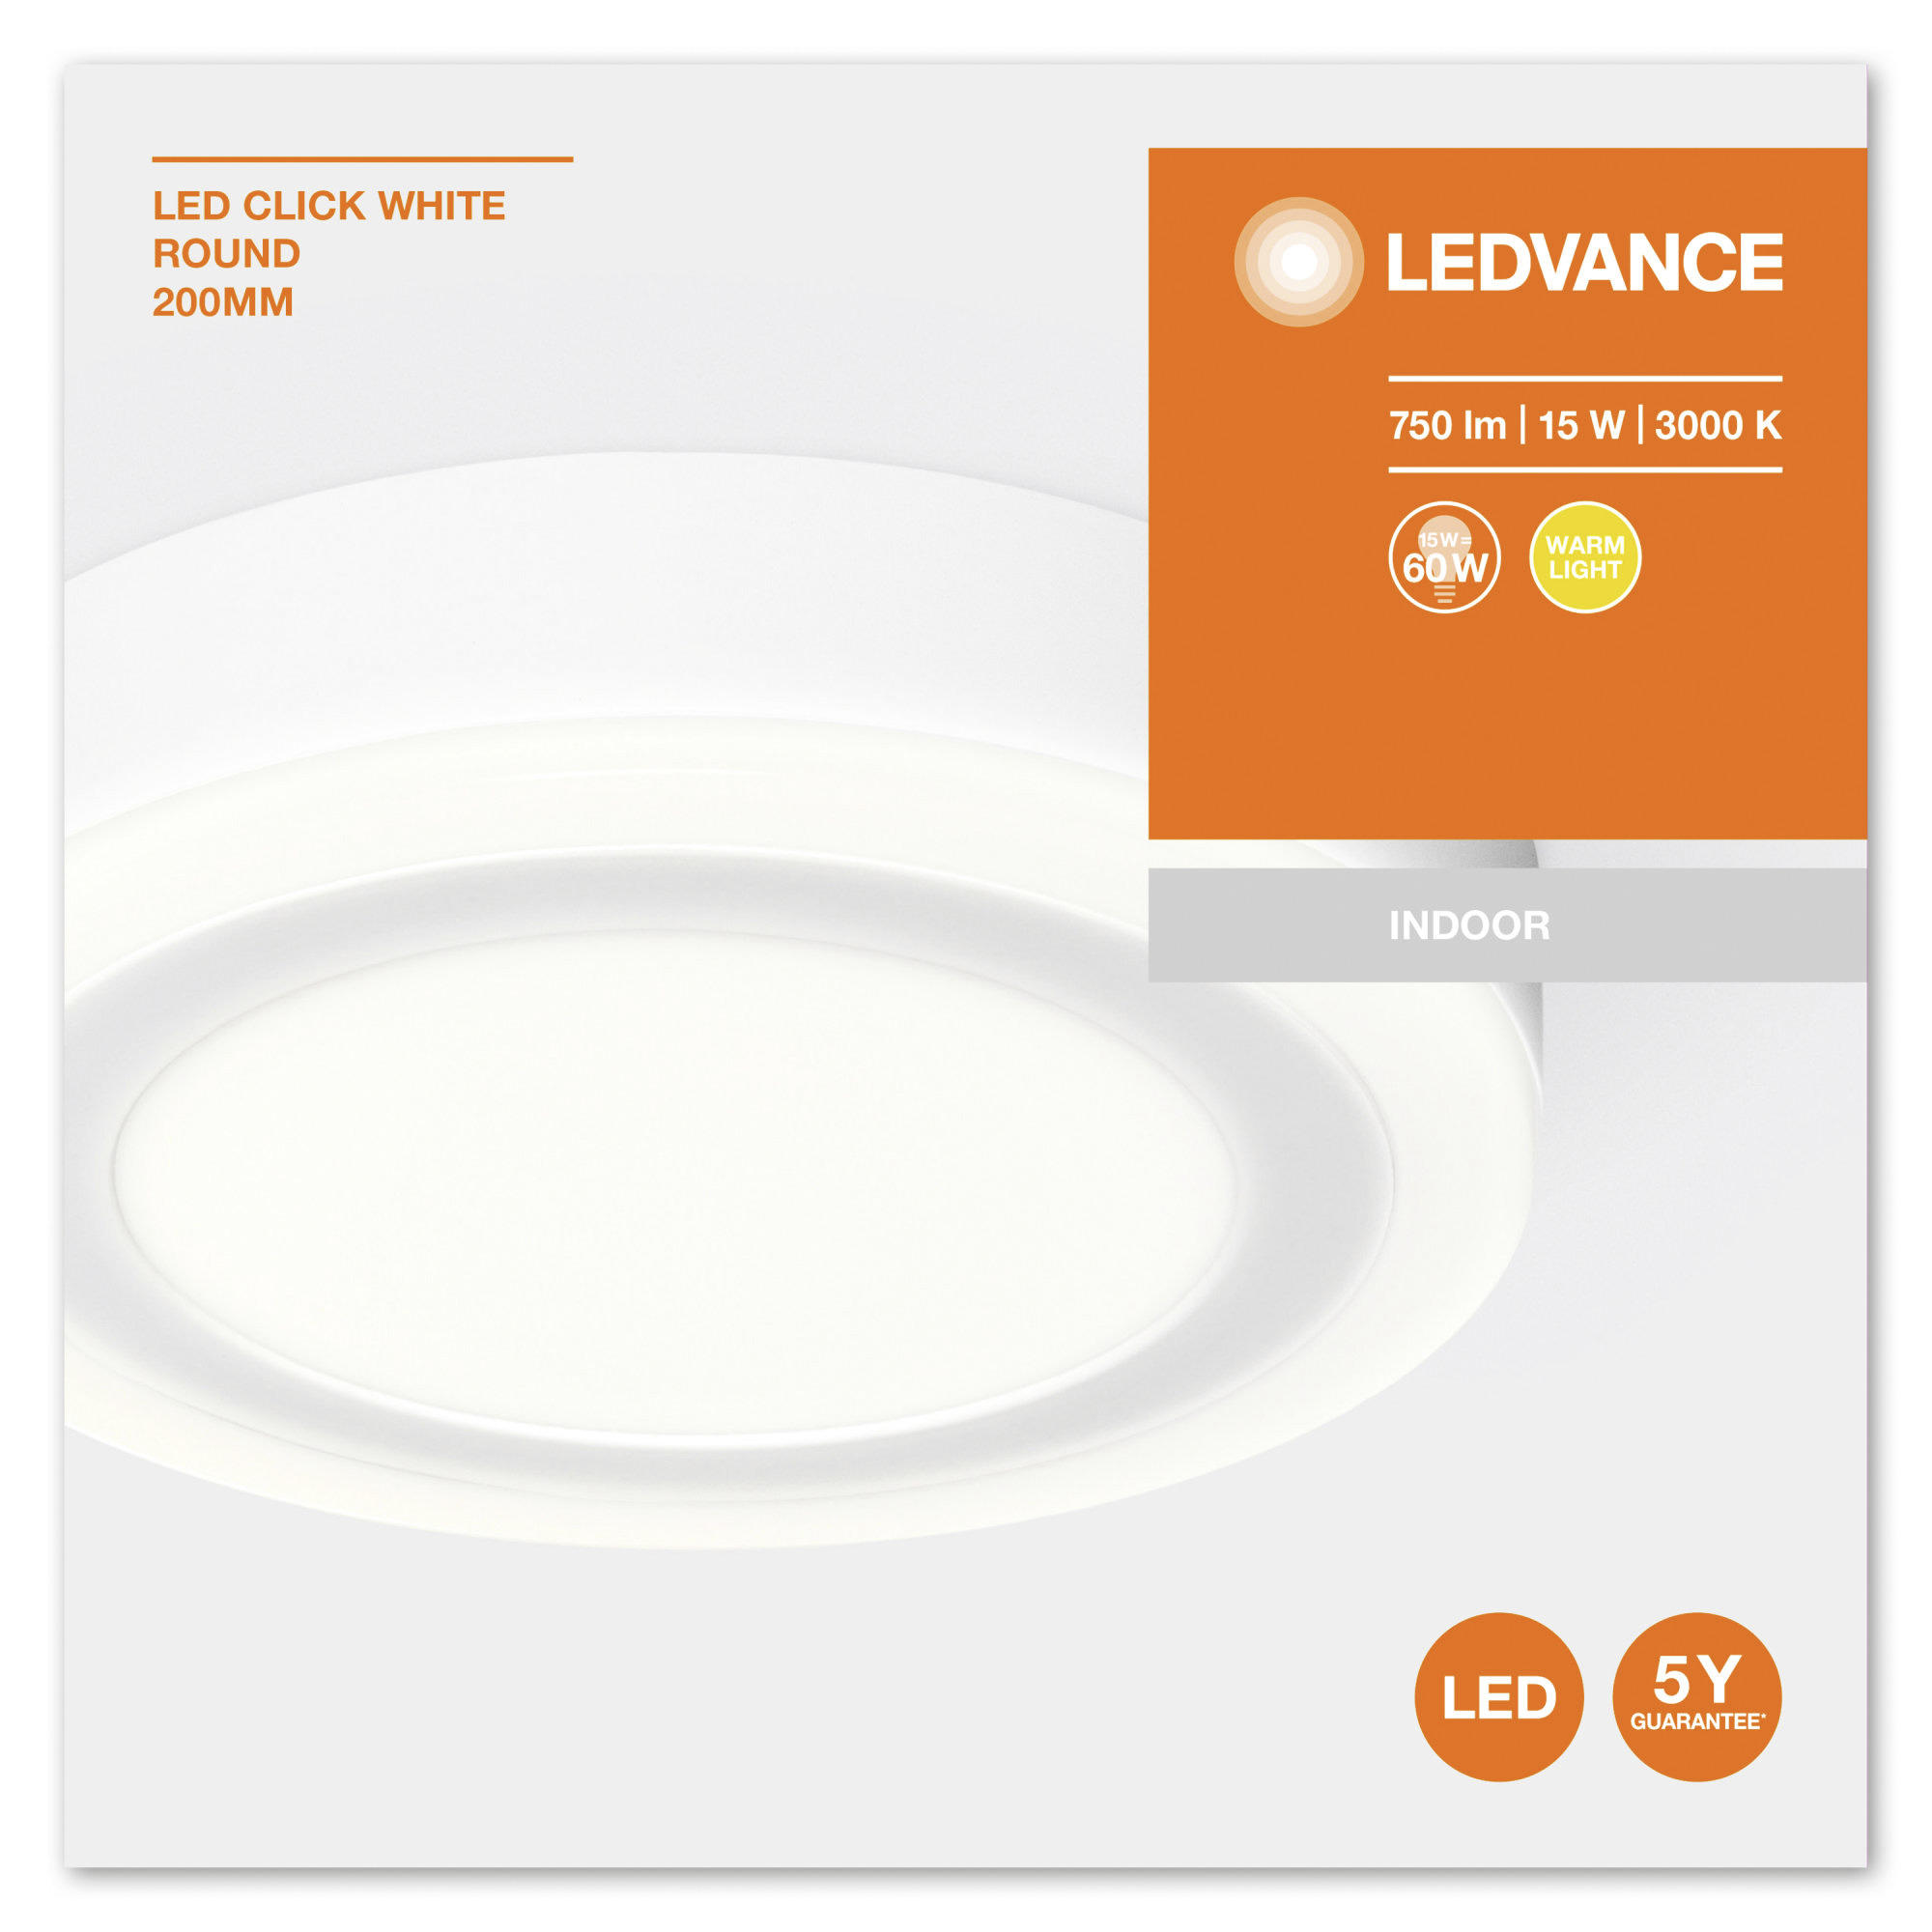 LED-DECKENLEUCHTE LED Click White Round  - Weiß, Basics, Kunststoff/Metall (19,7/4cm) - Ledvance